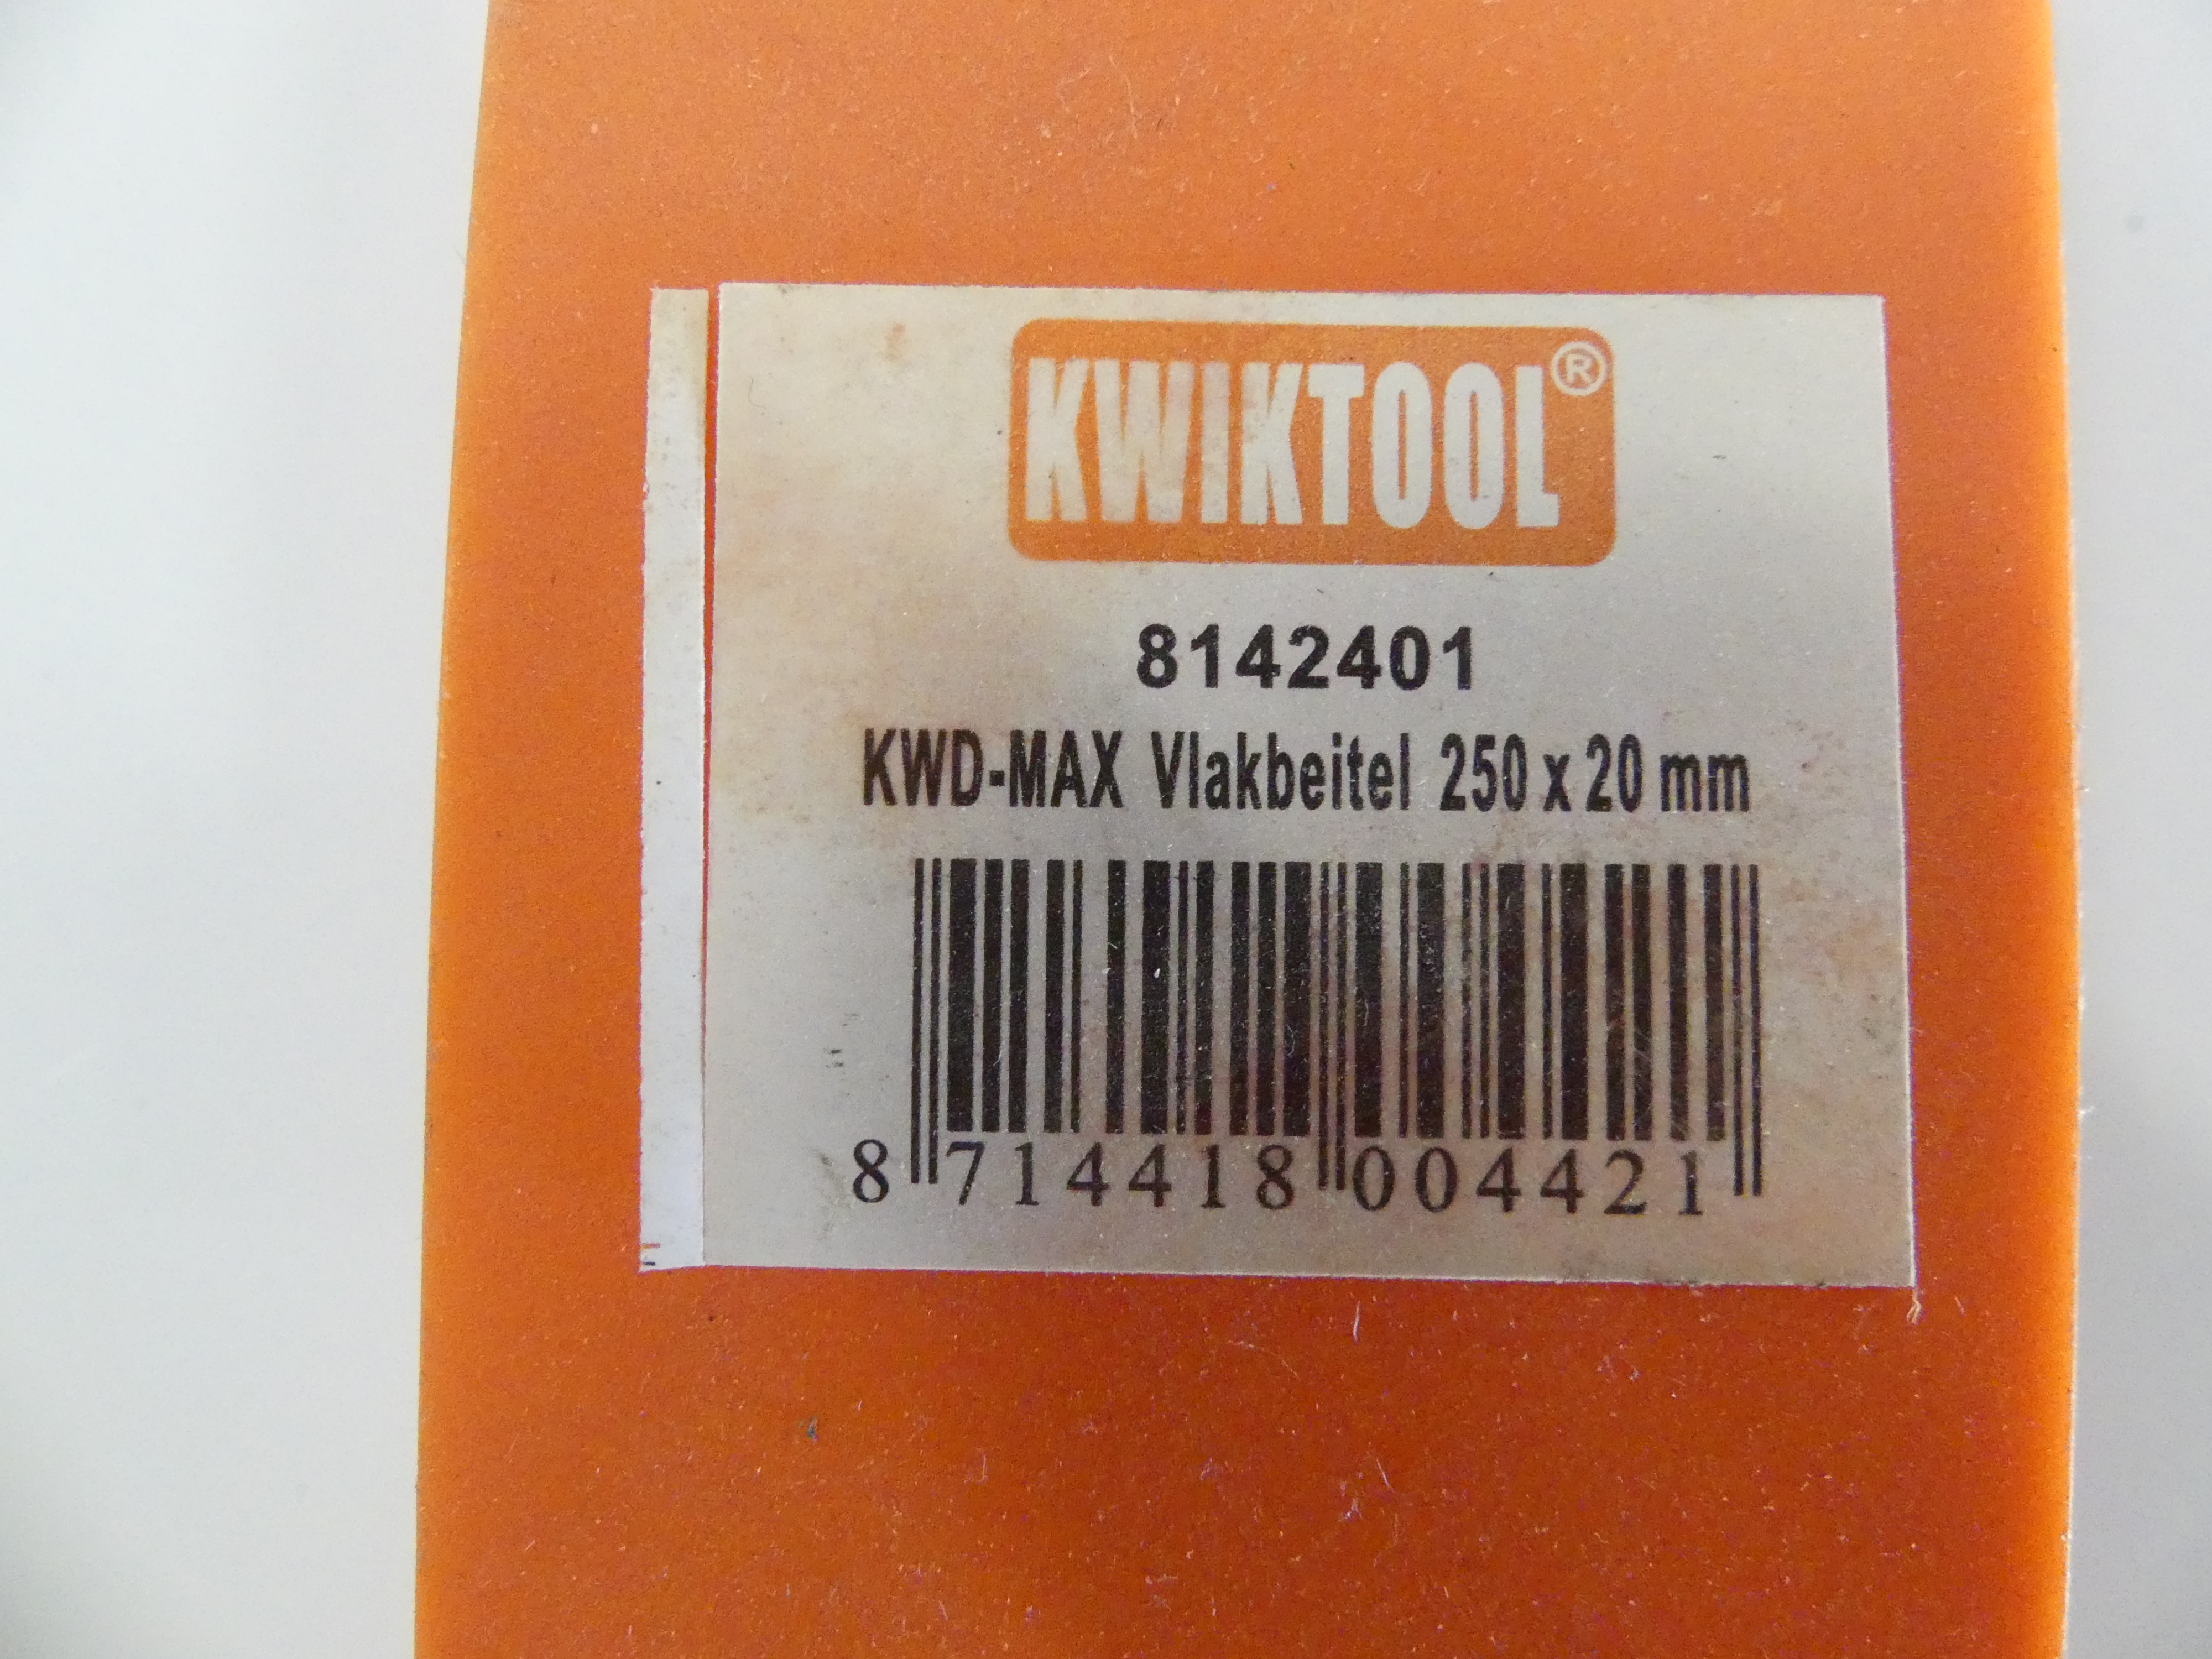 2x Kwiktool KWD-MAX vlakbeitel 250x20mm   